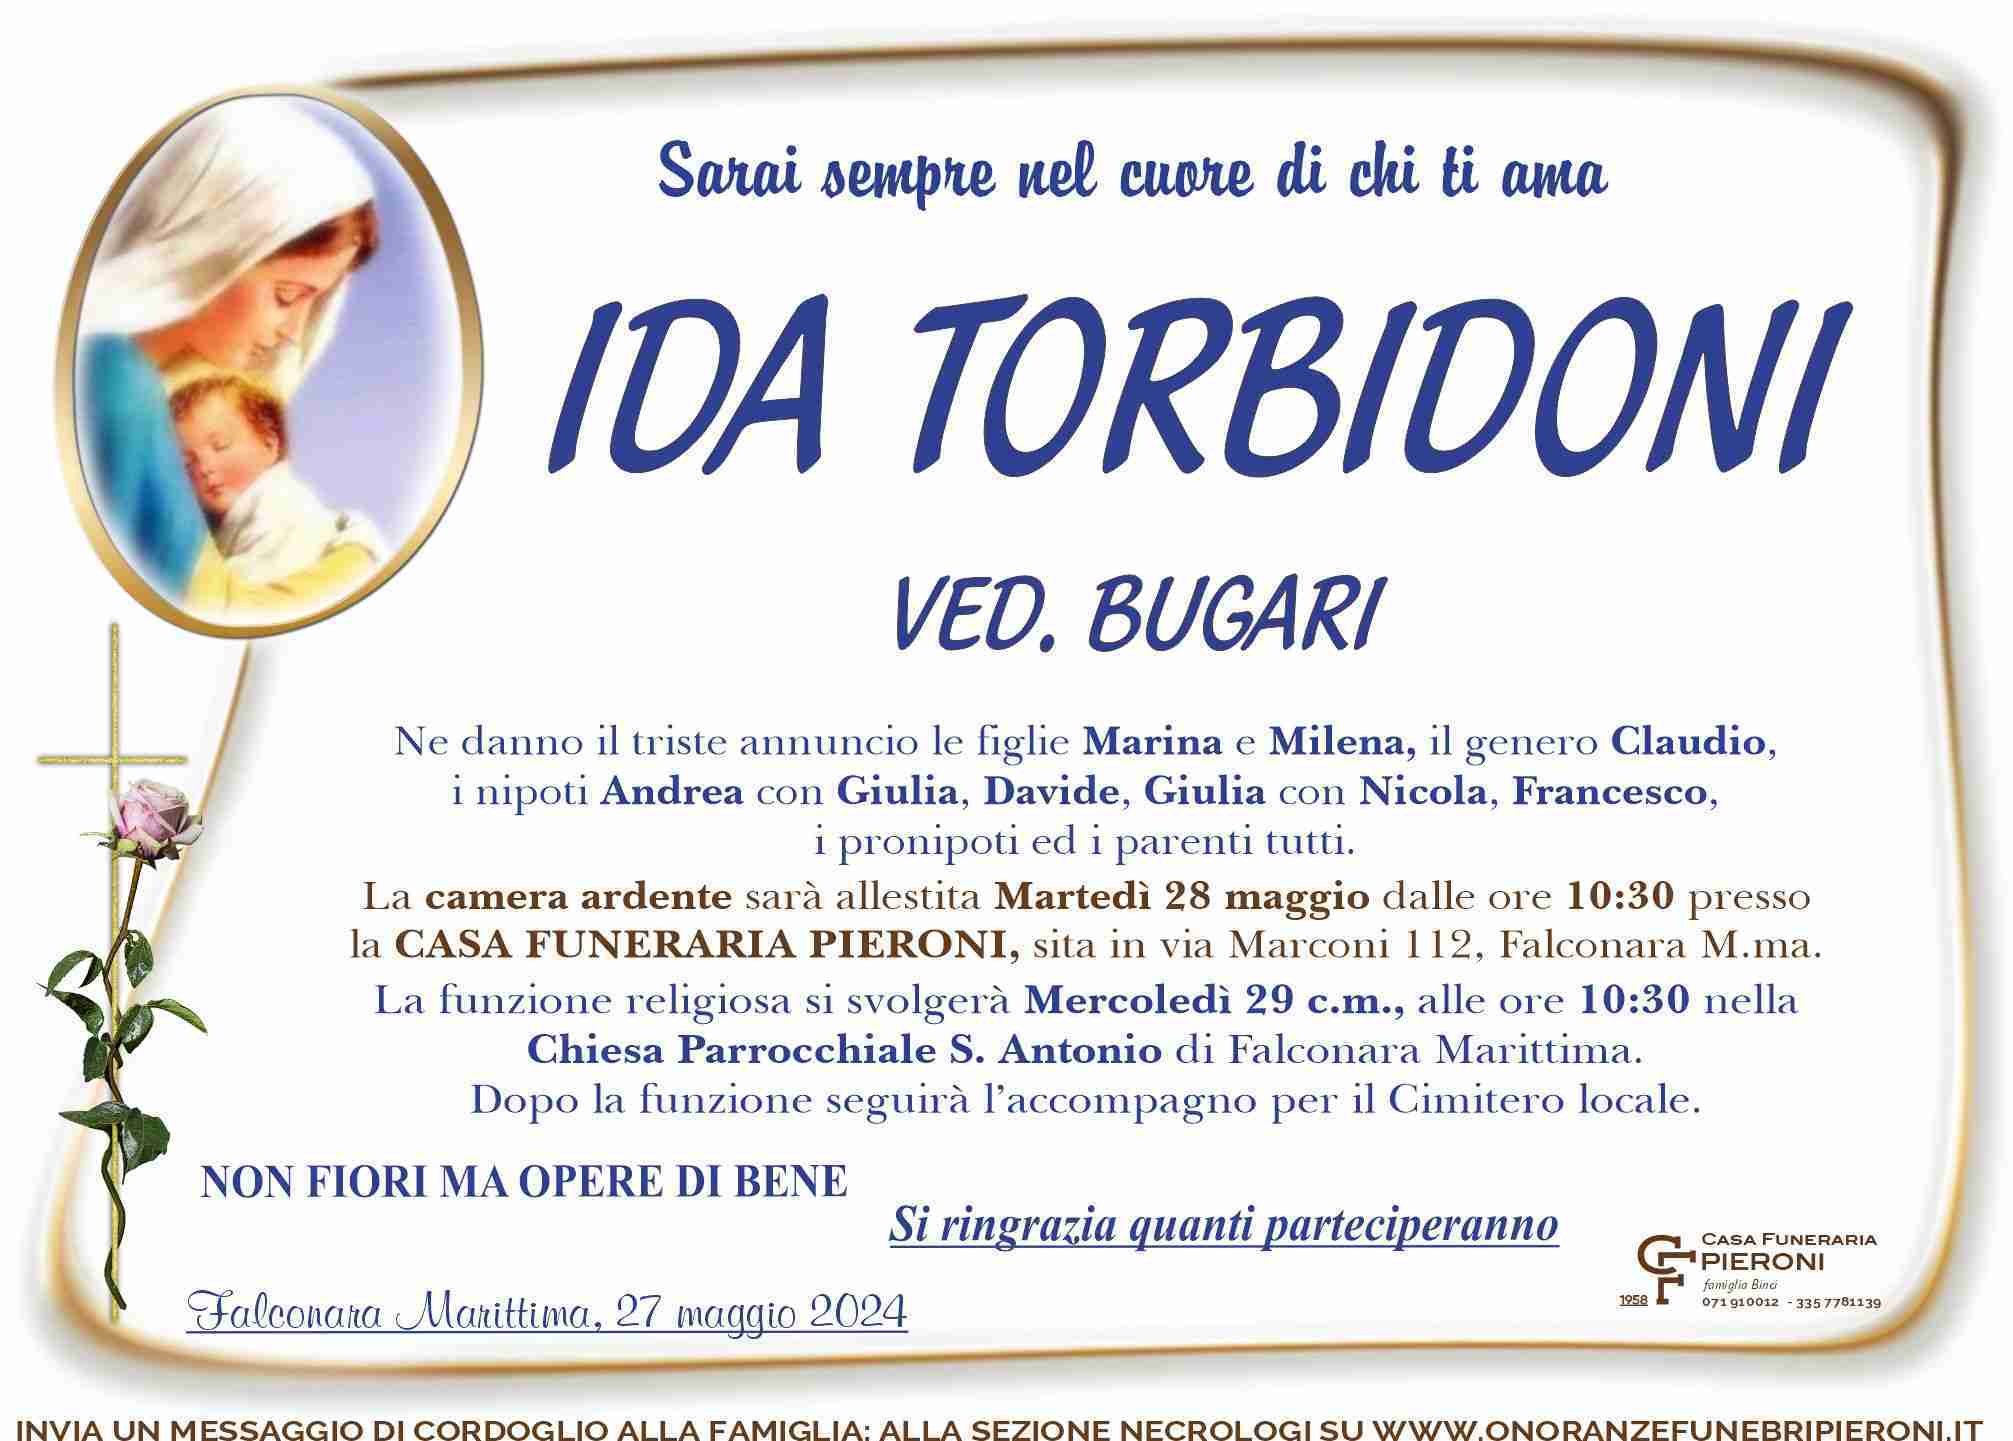 Ida Torbidoni